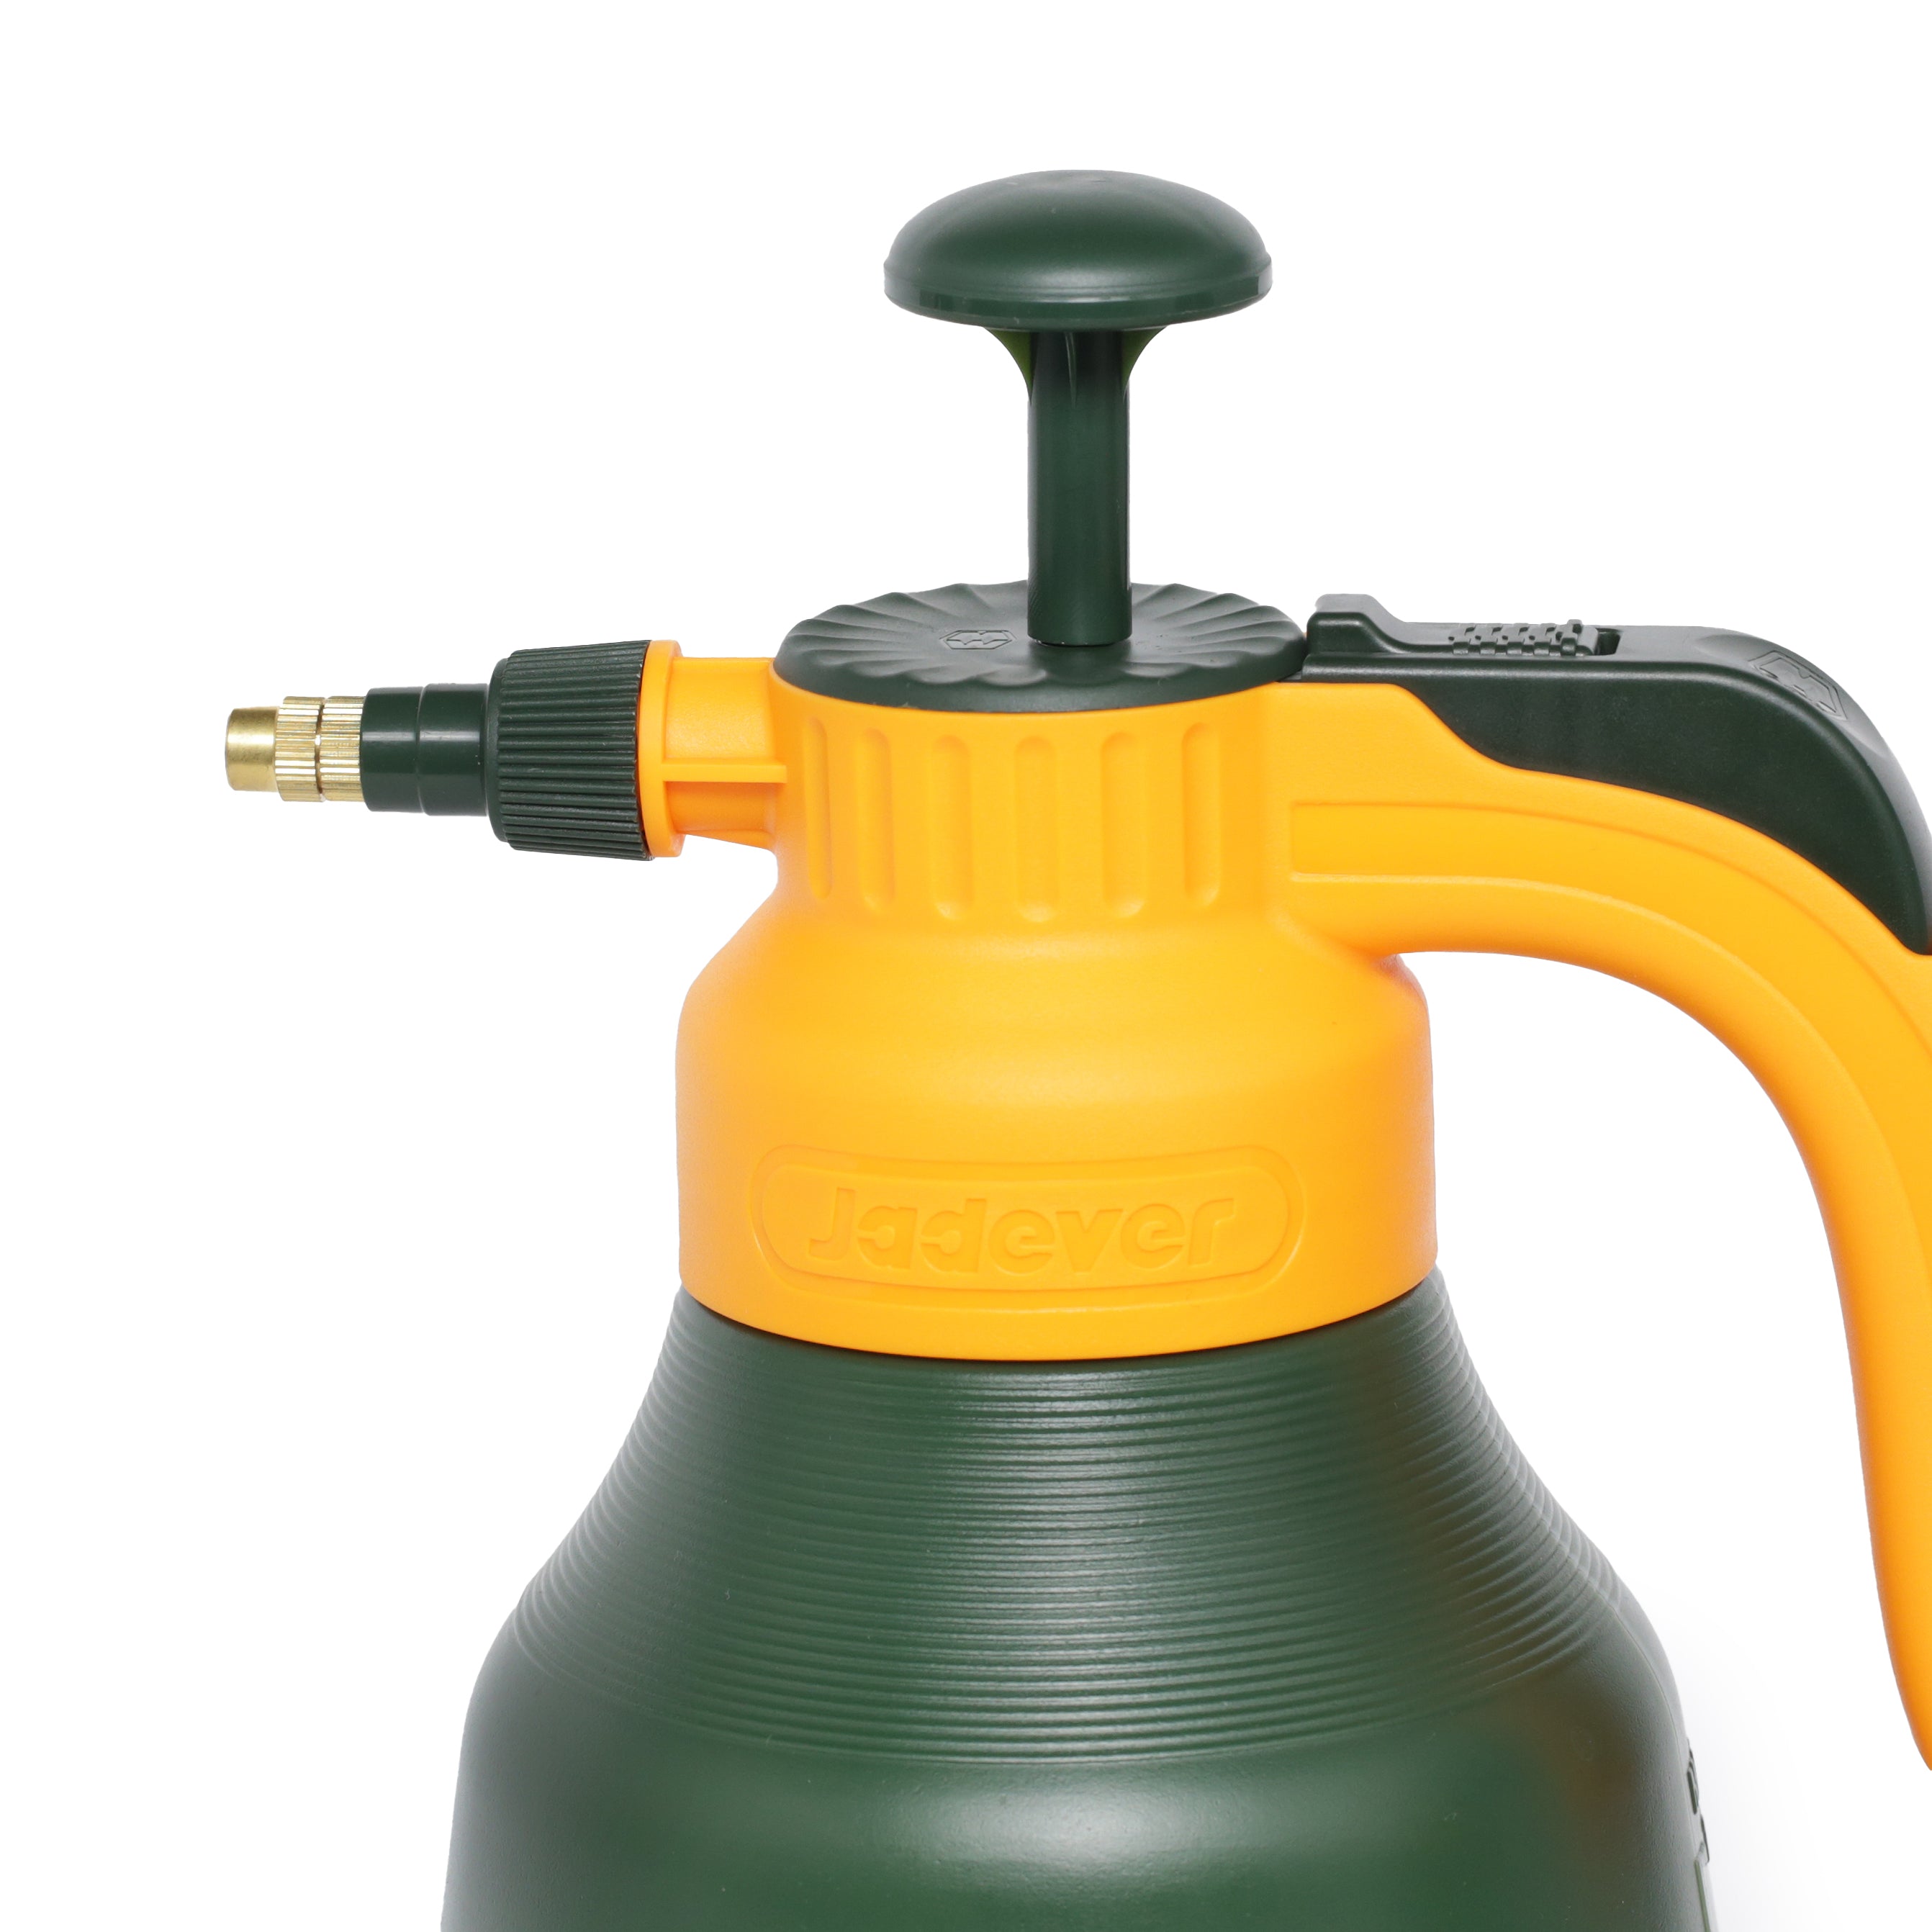 Jadever 1.5L Pressure Sprayer